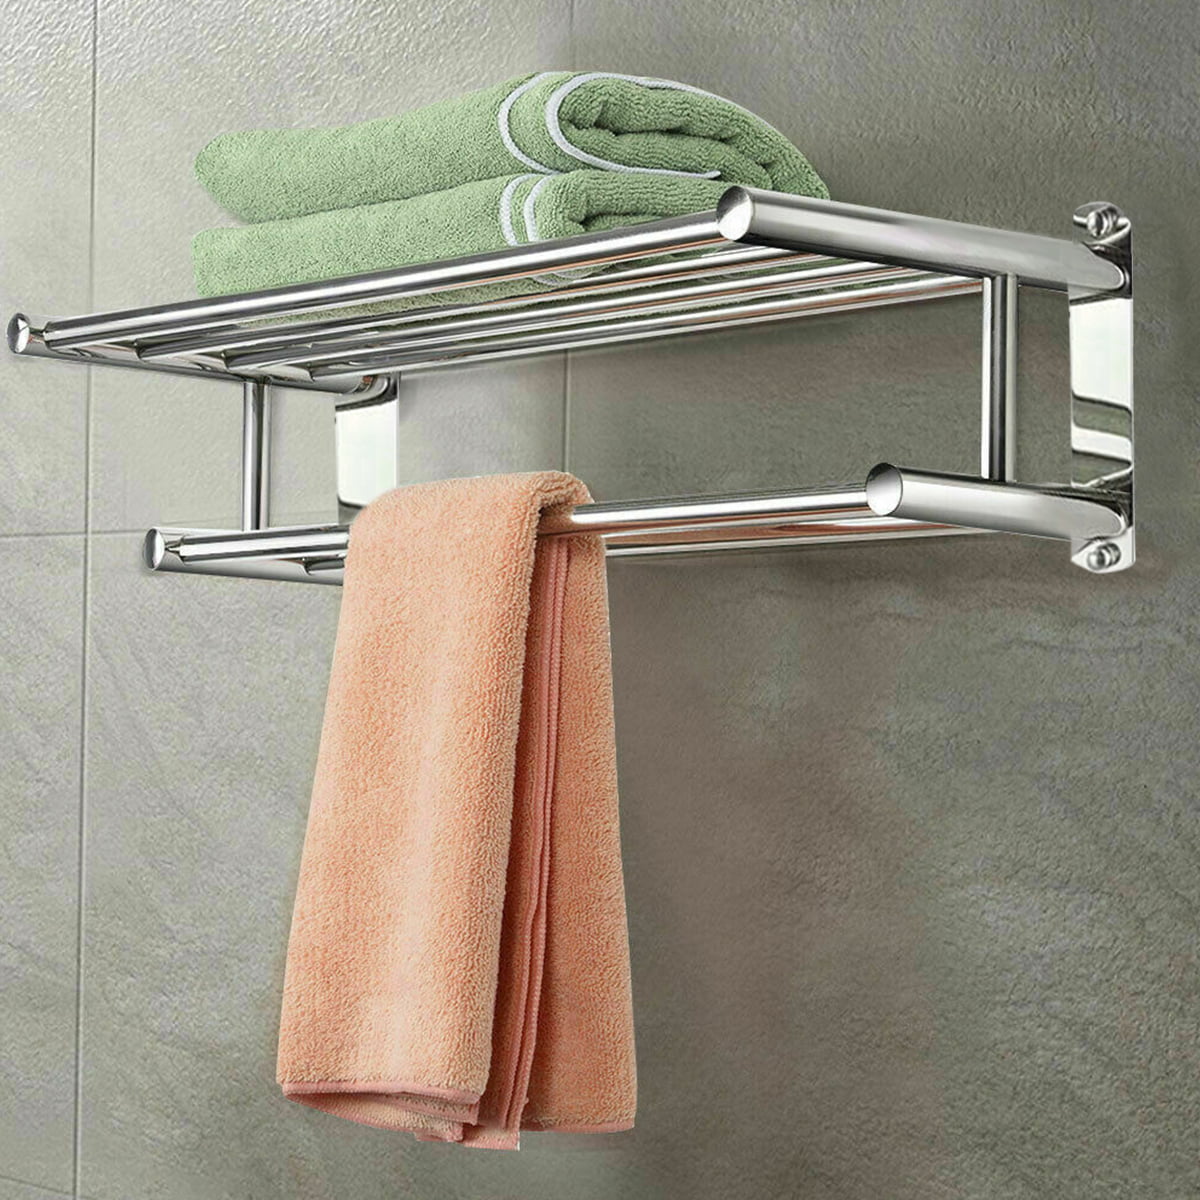 Bathroom Towel Bar Wall Mounted Rotating Rack Towel Shelf Holder Stainless Steel 